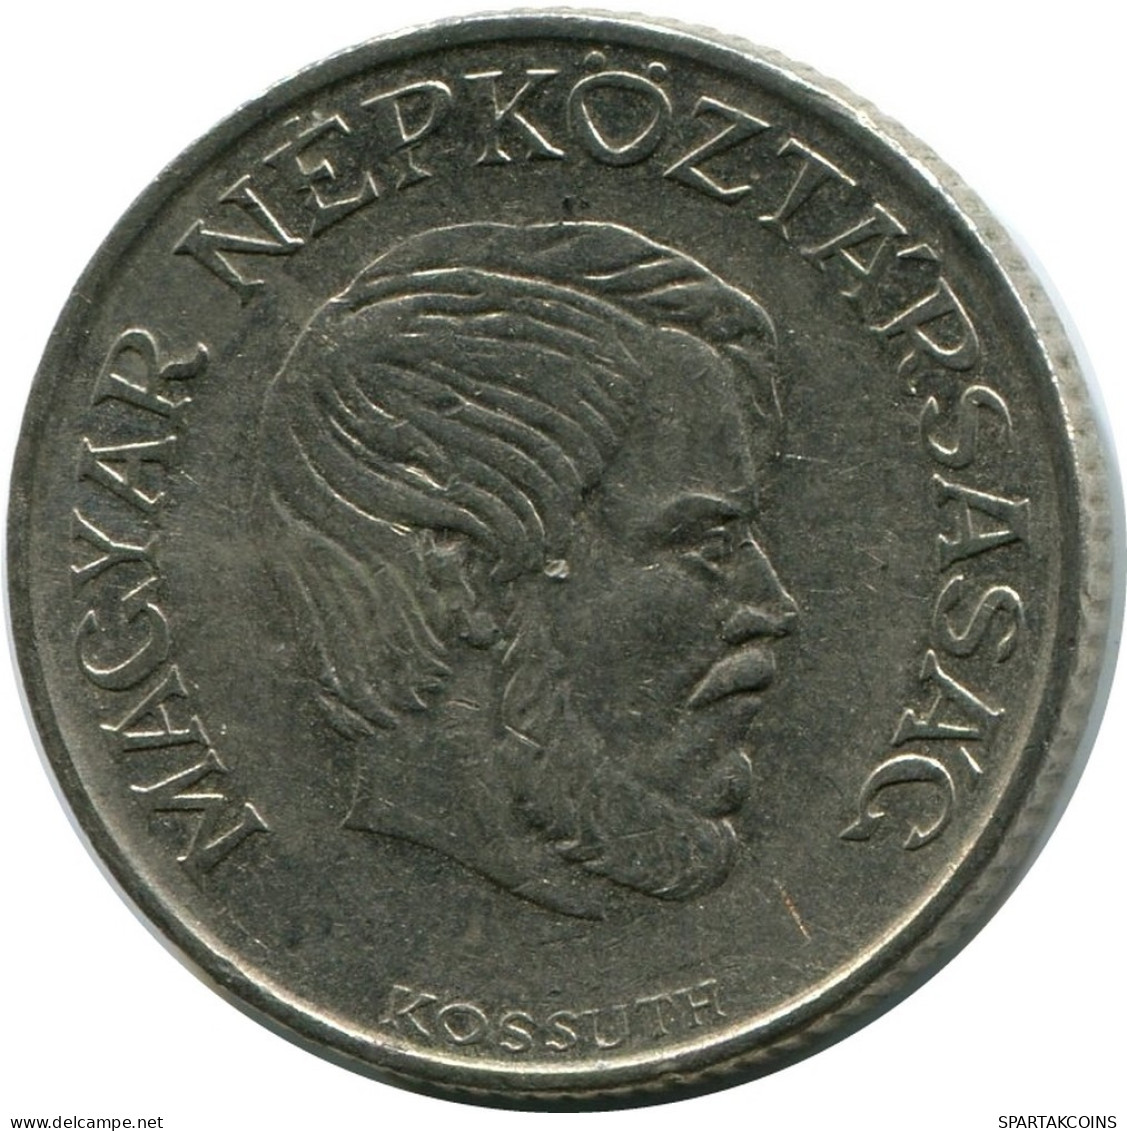 5 FORINT 1983 HUNGARY Coin #M10228.U.A - Hungary